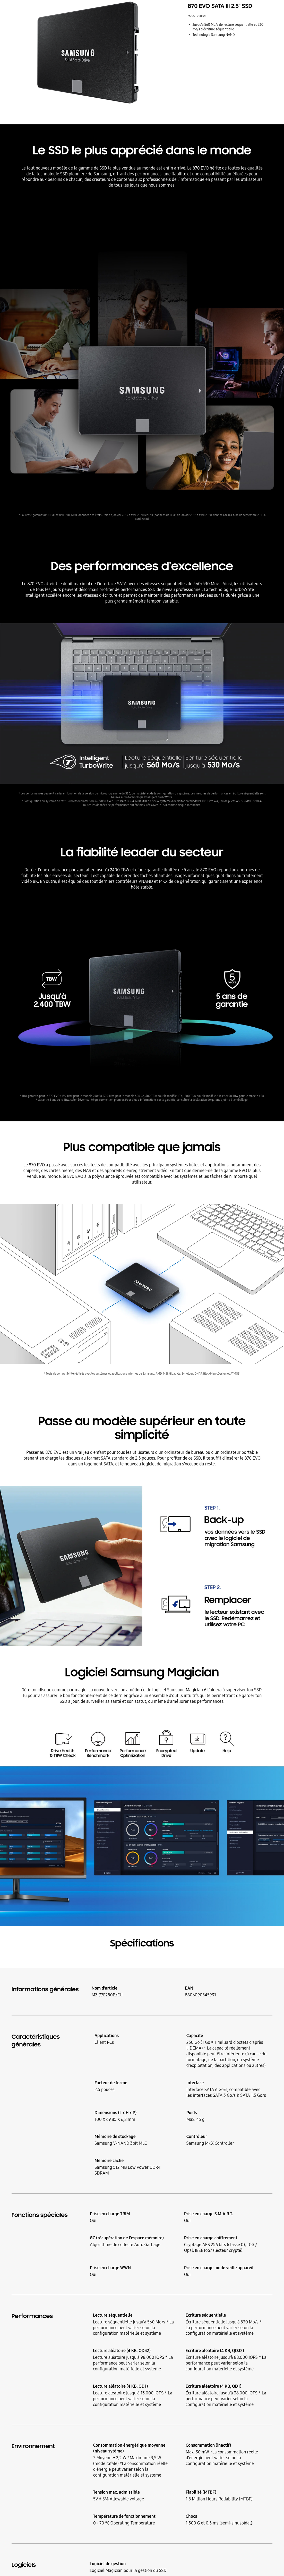 Disque Dur interne SSD Samsung 870 EVO SATA III, 2.5 500 Go (MZ